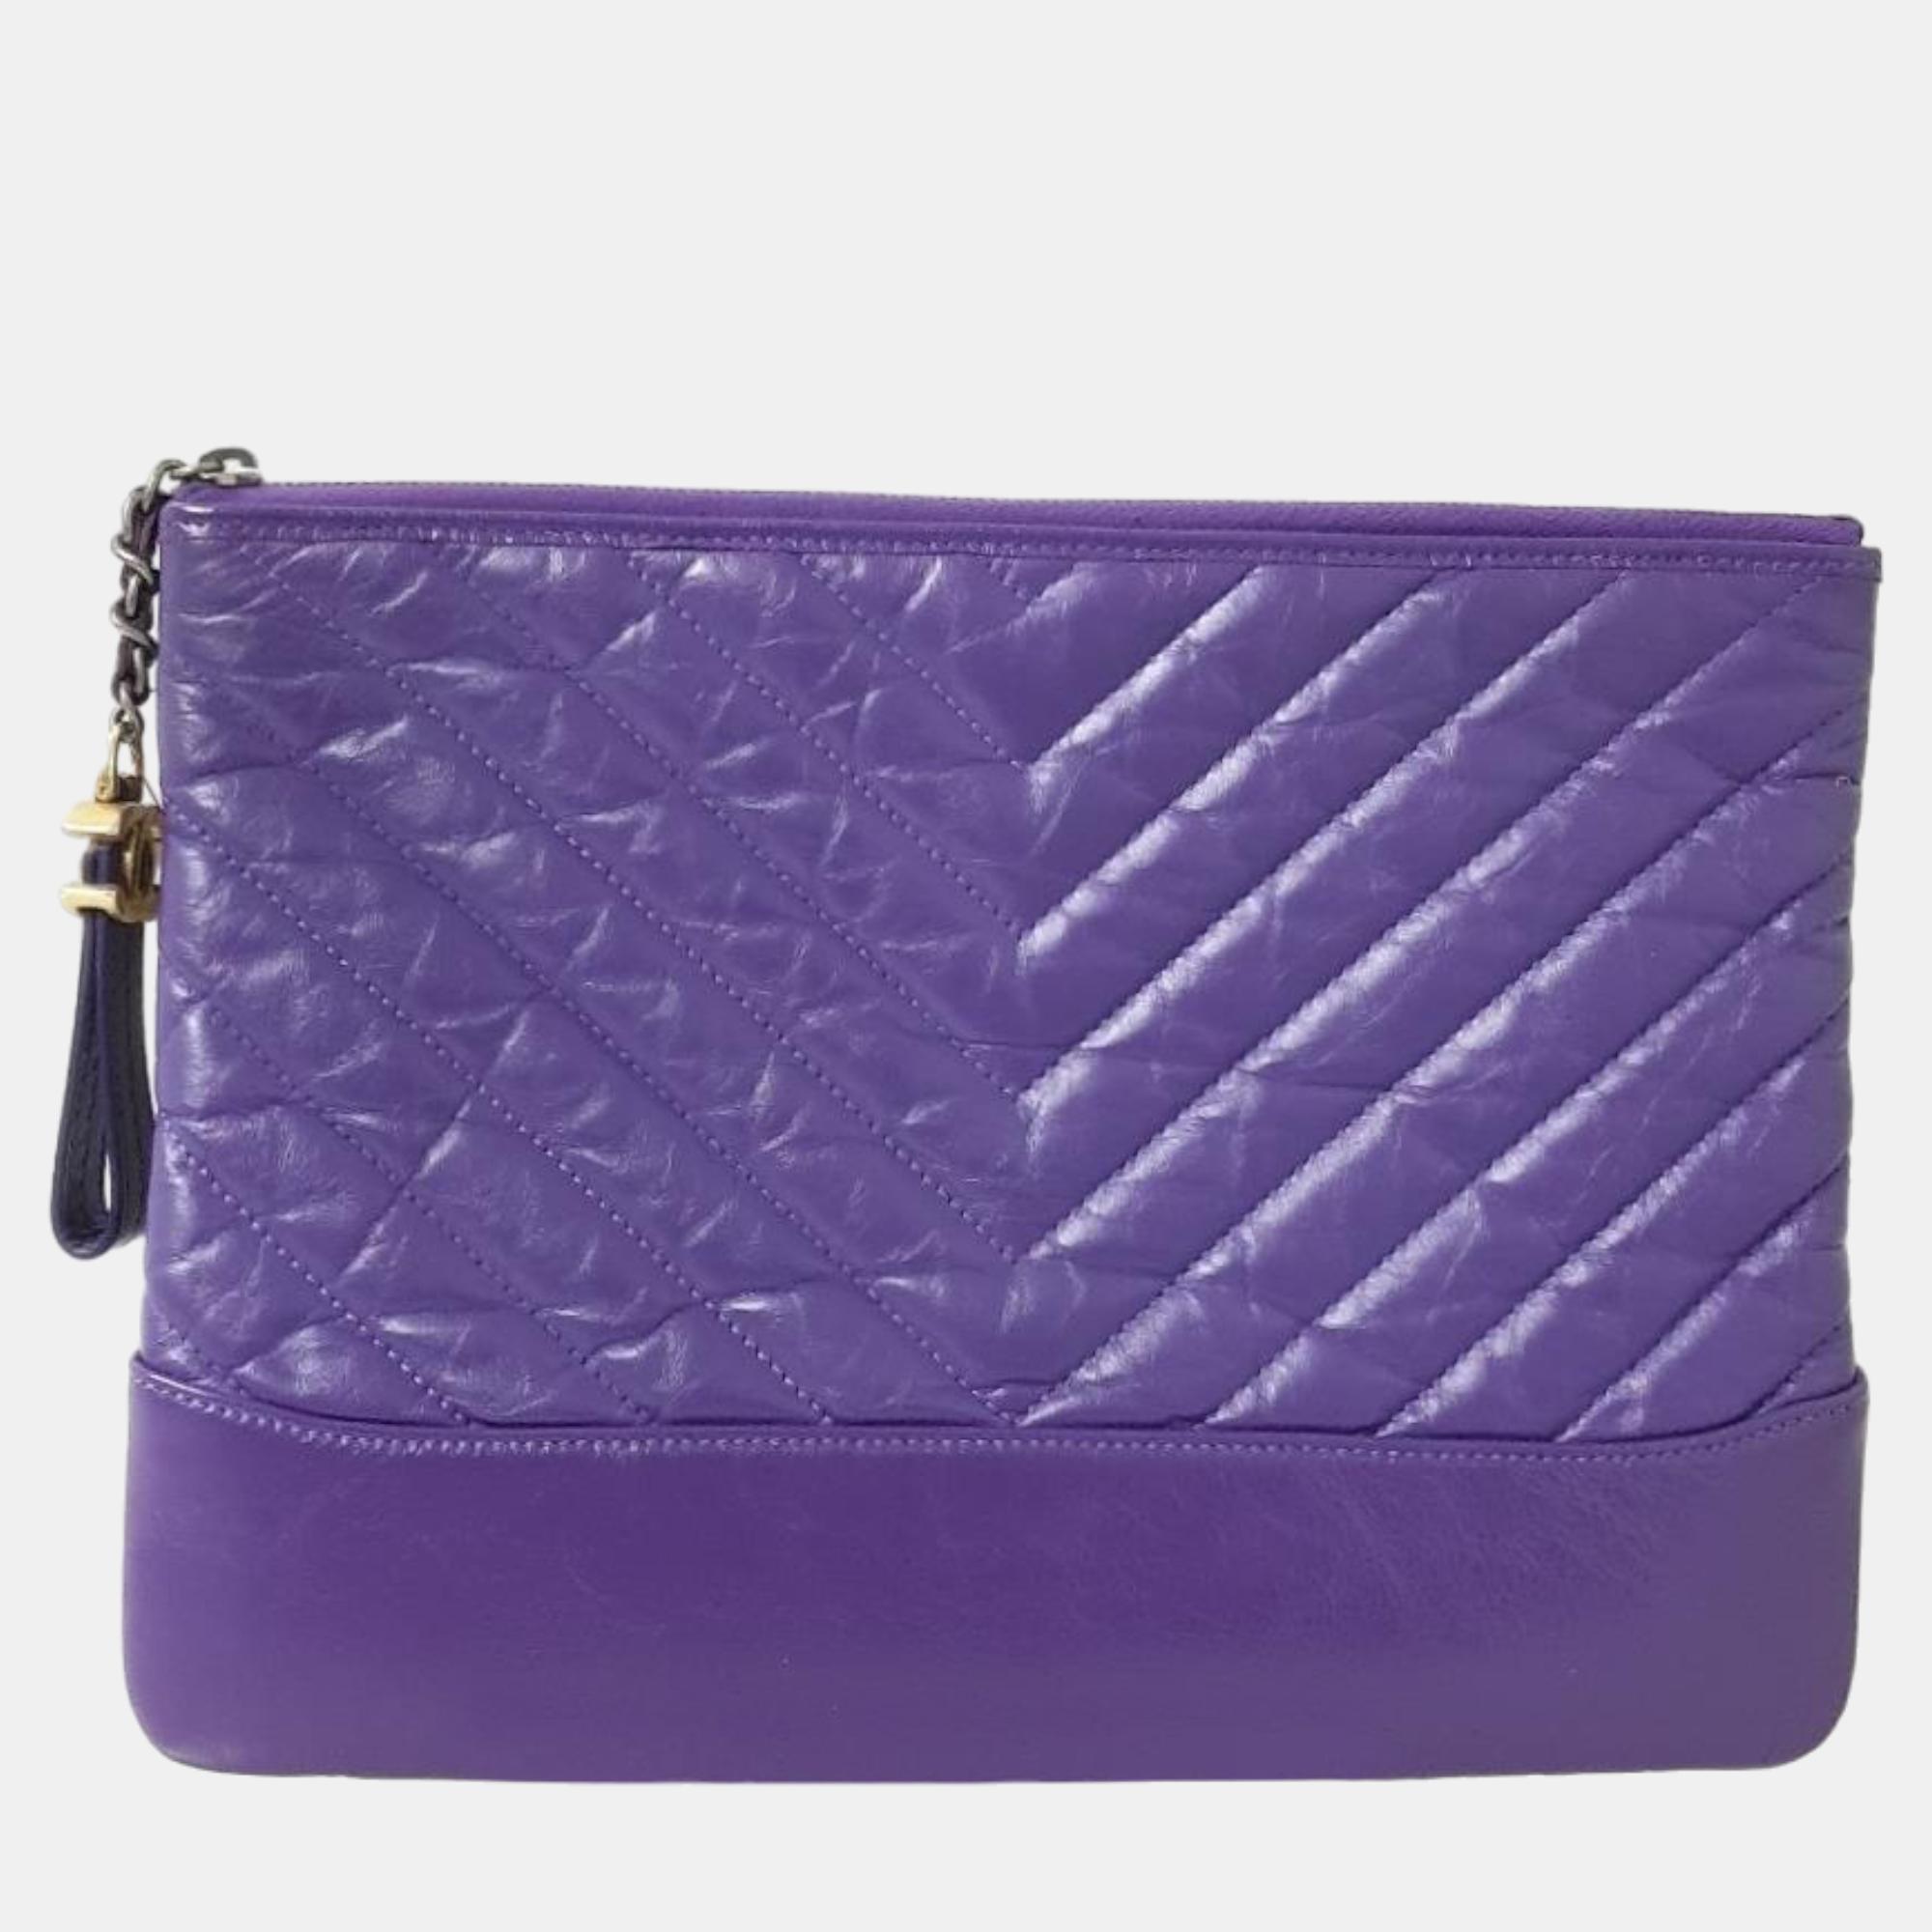 Chanel purple vintage gabrielle clutch